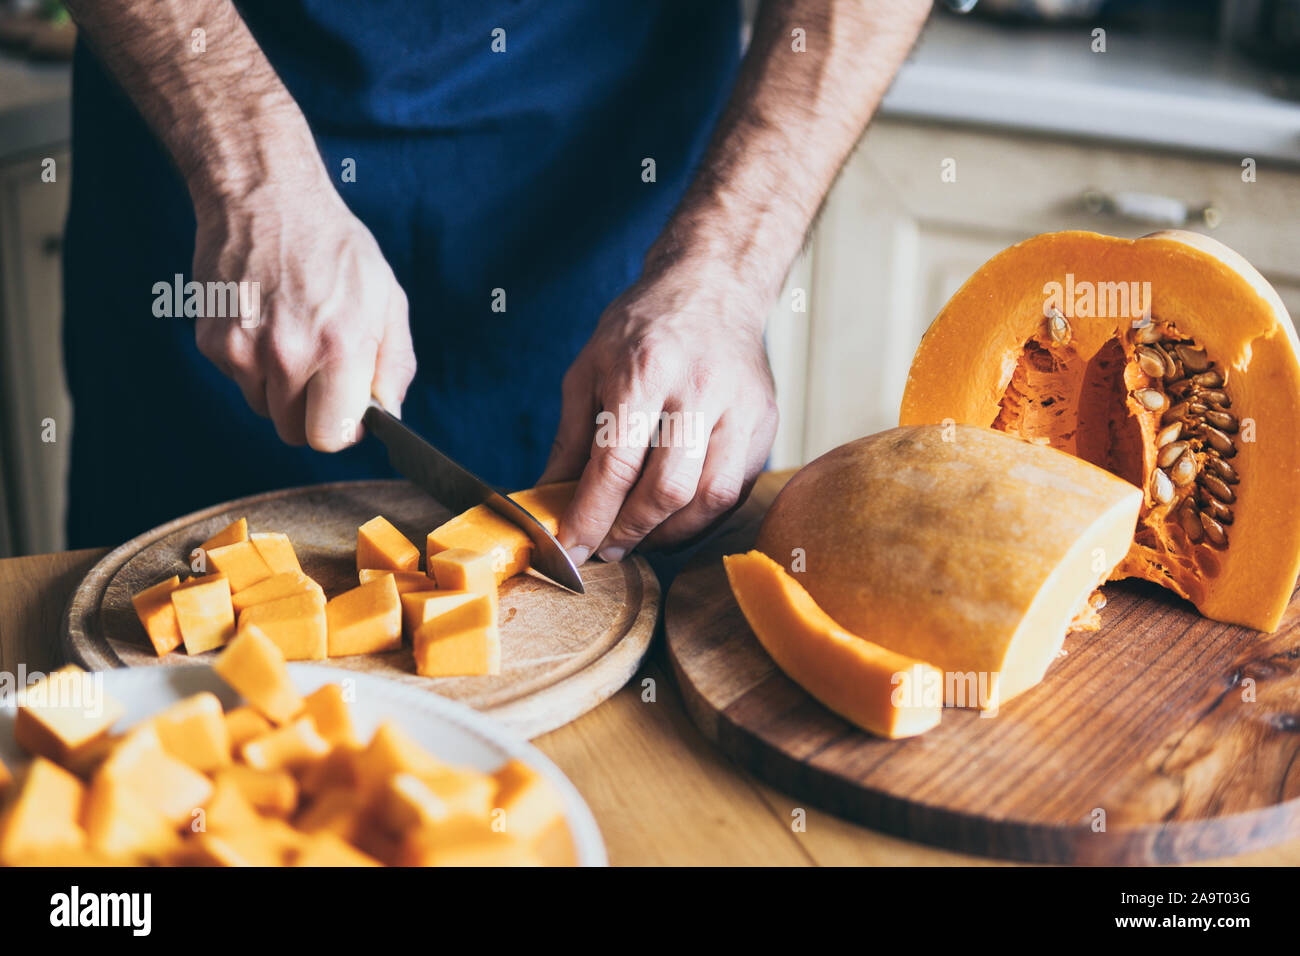 Man cuts orange pumpkin in the kitchen at home Stock Photo